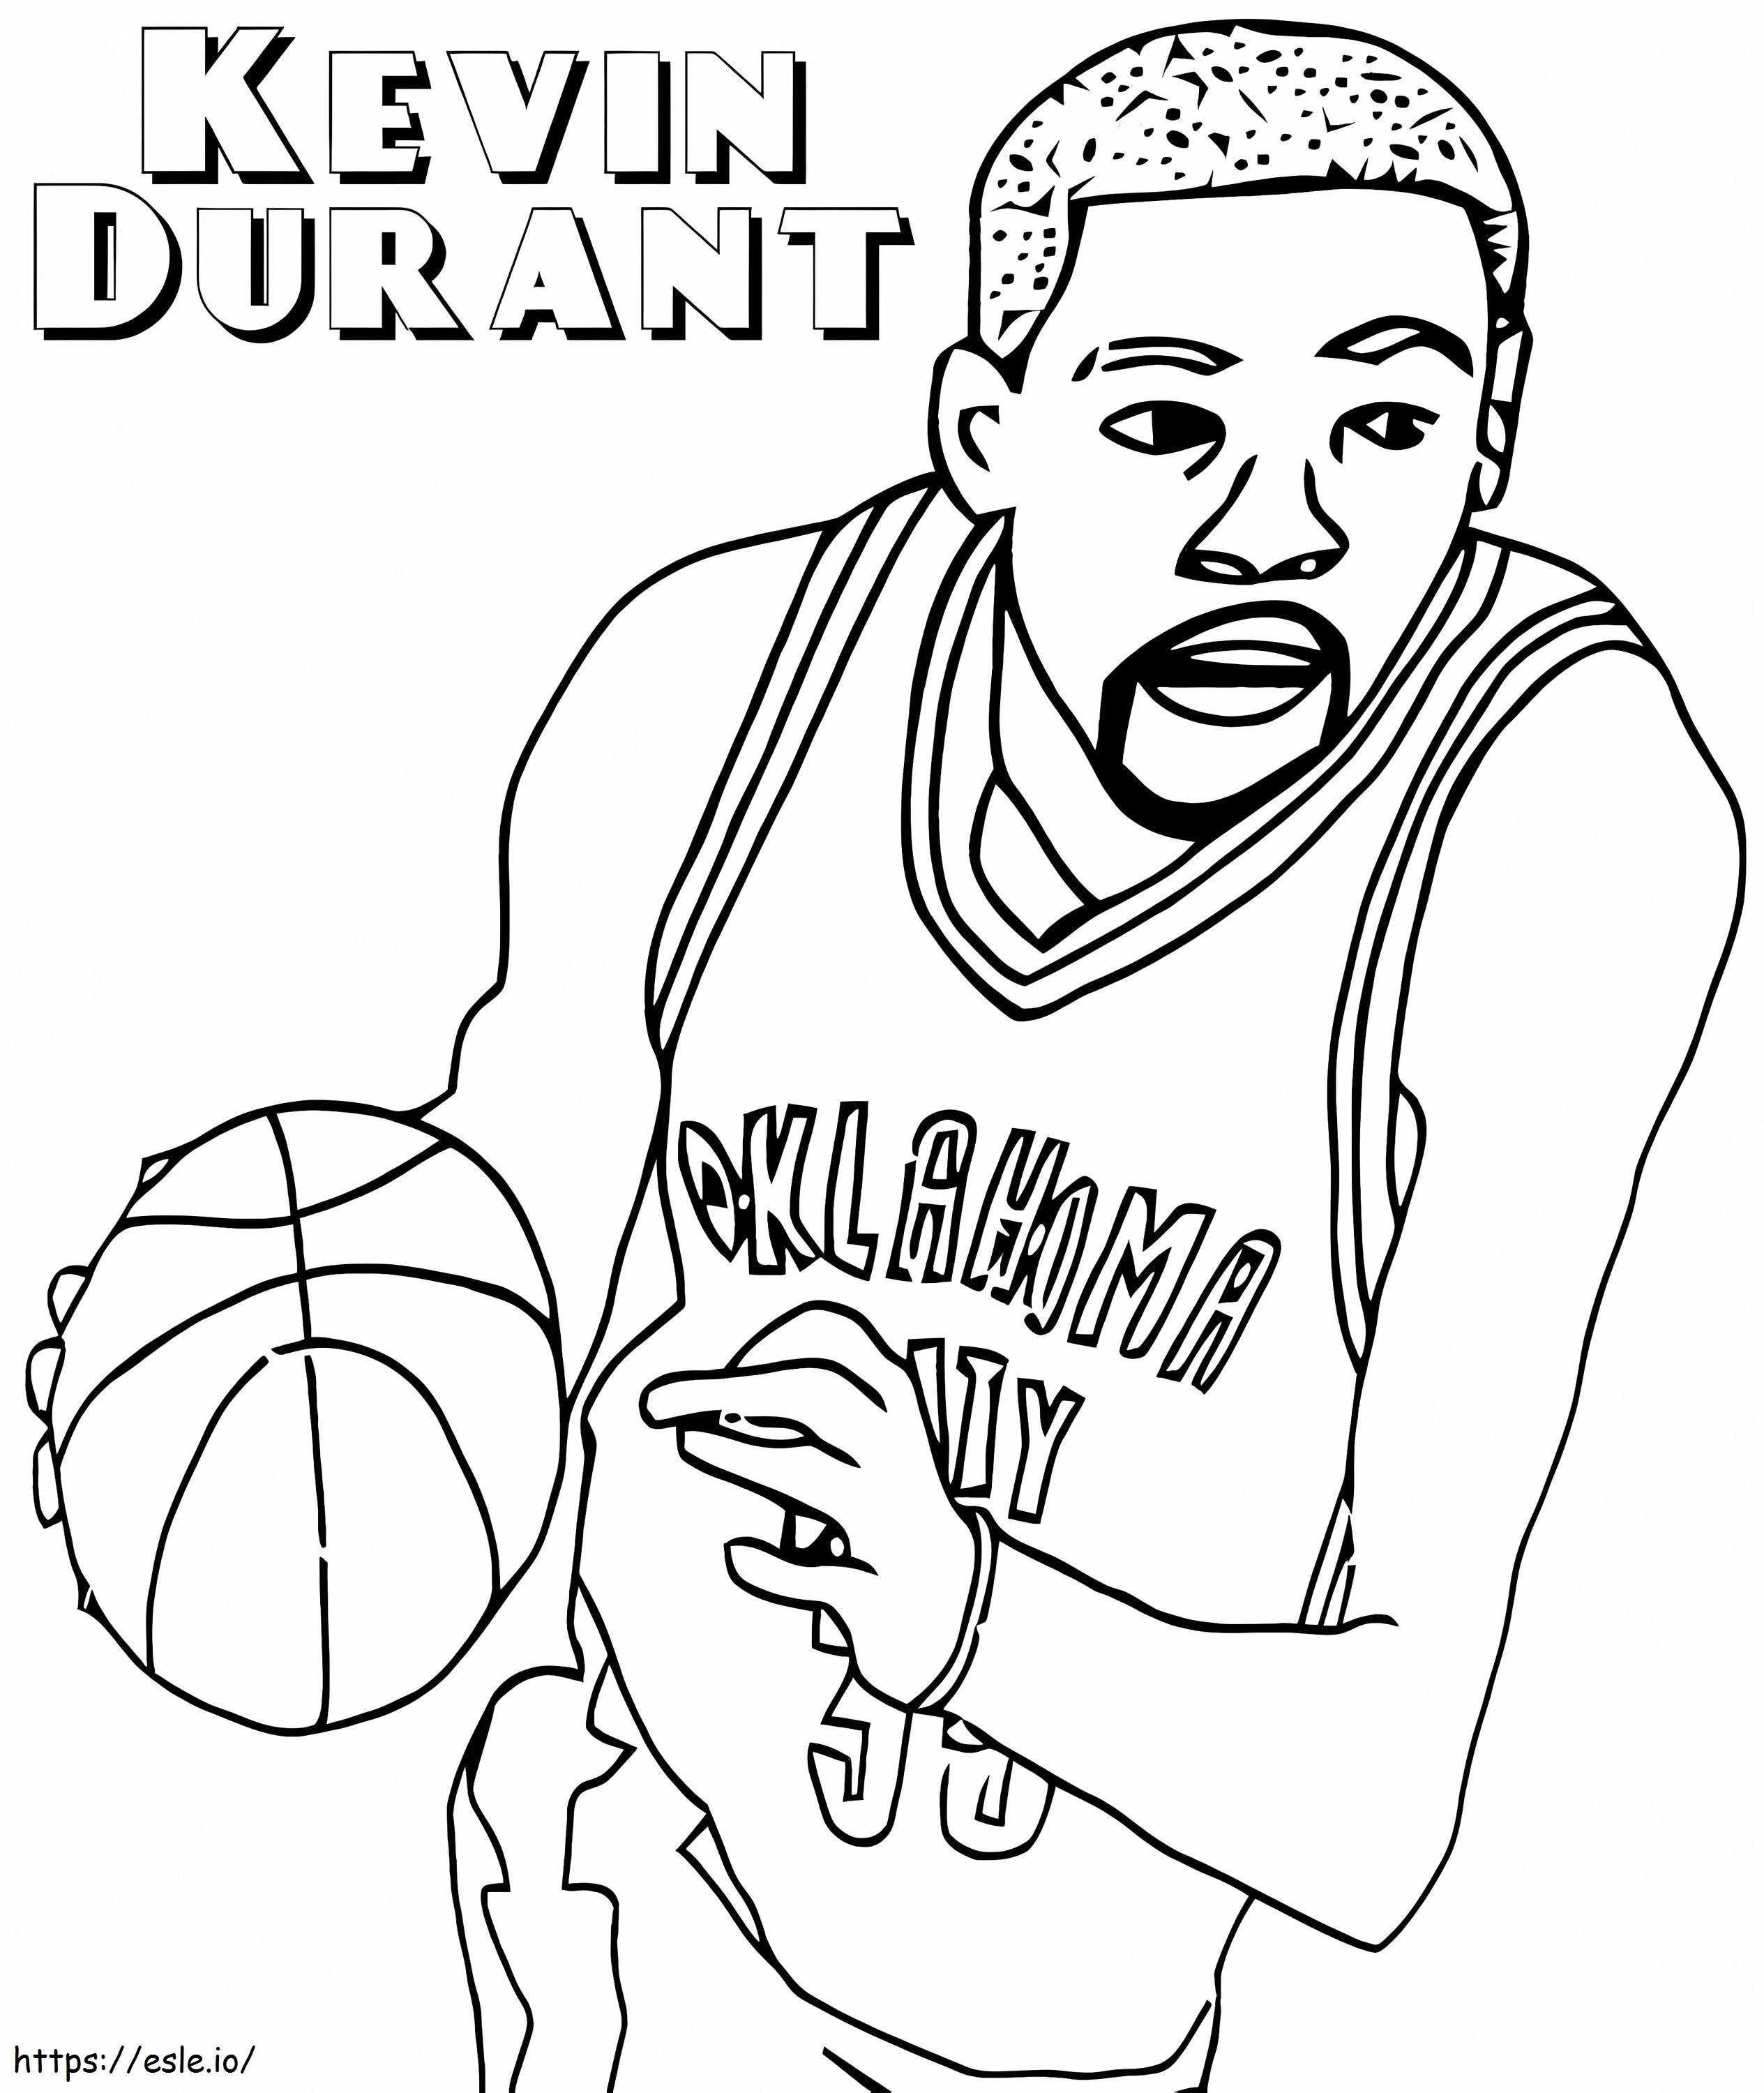 Livre Kevin Durant para colorir